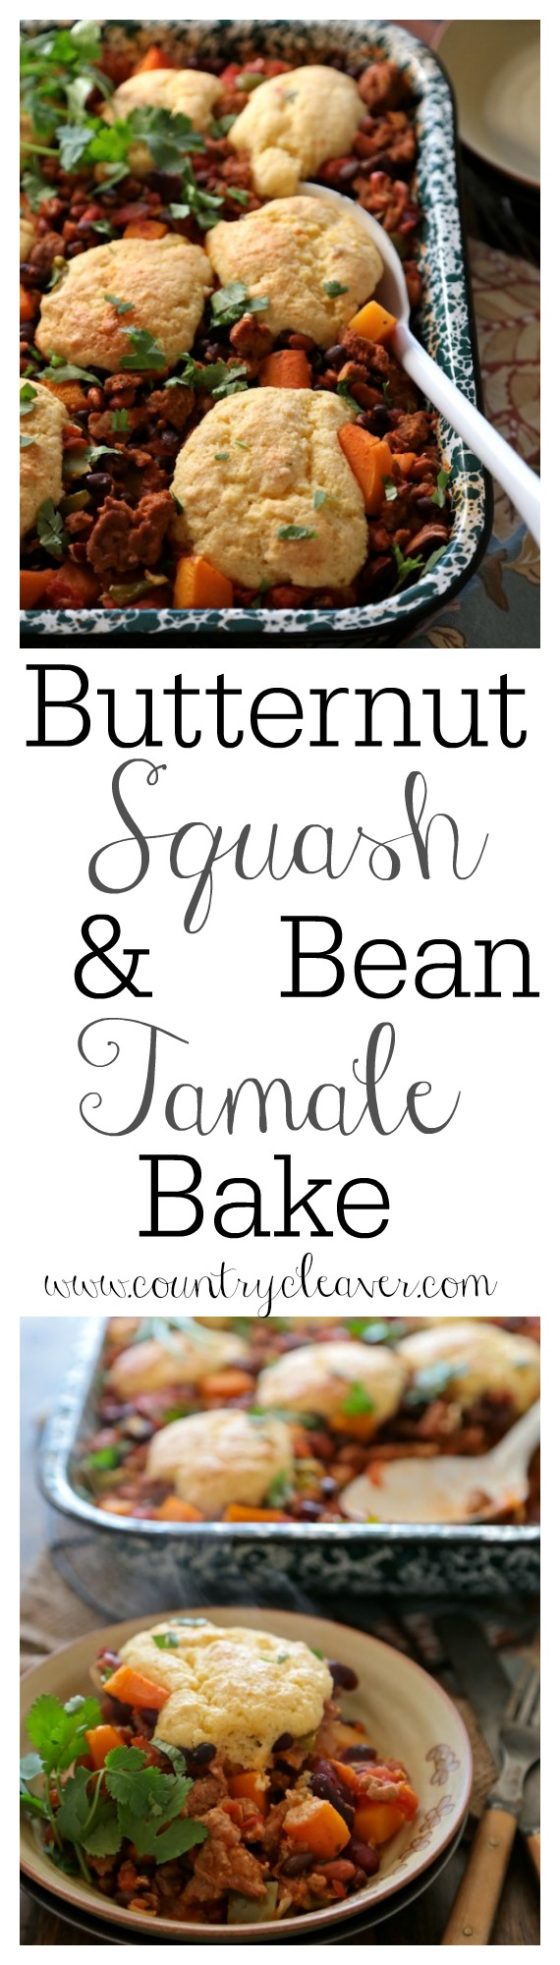 Butternut Squash & Bean Tamale Bake